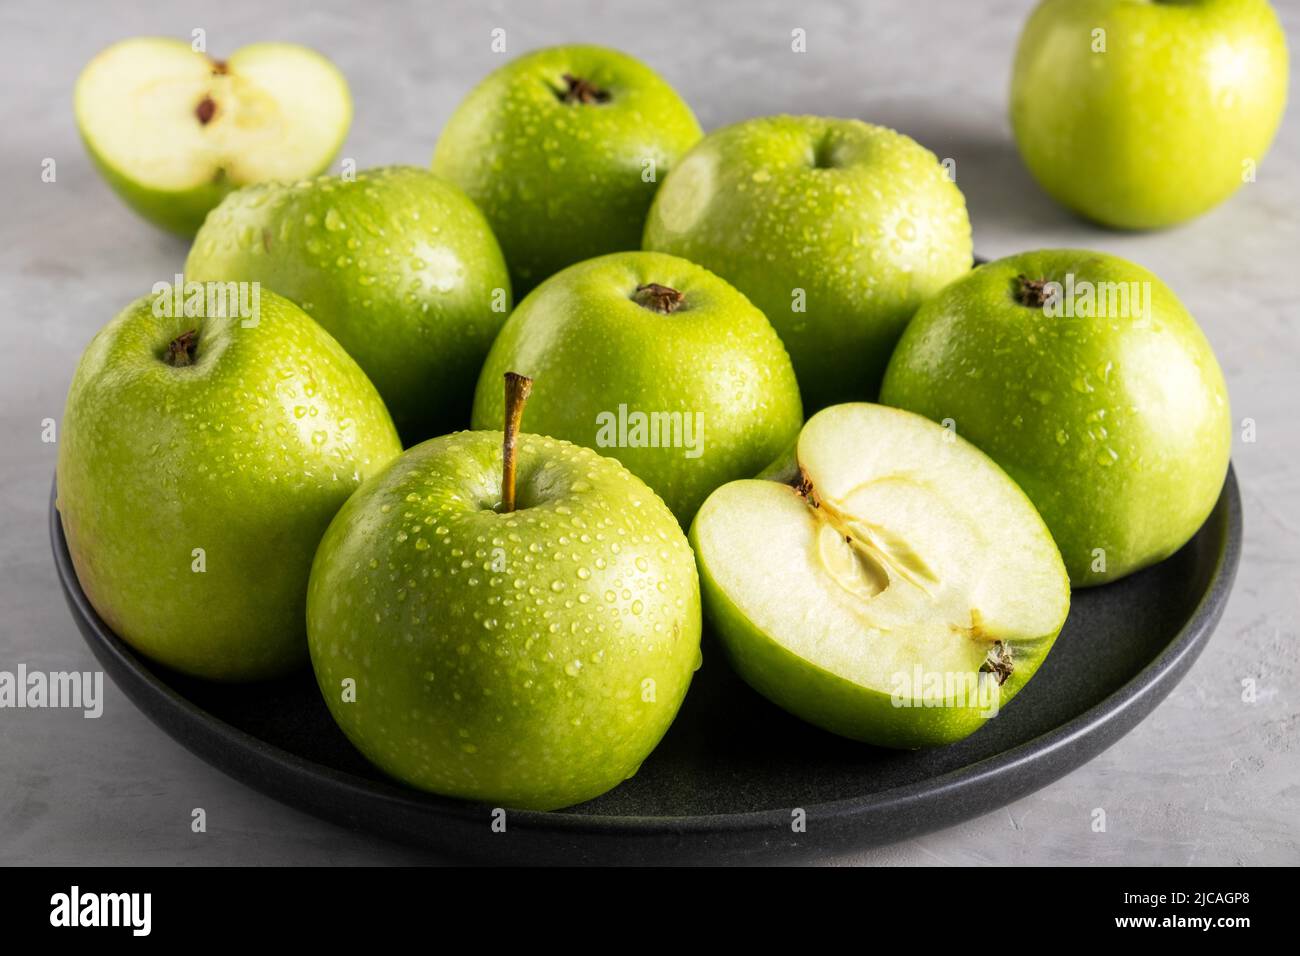 Fresh ripe green apples on a black ceramic plate Stock Photo